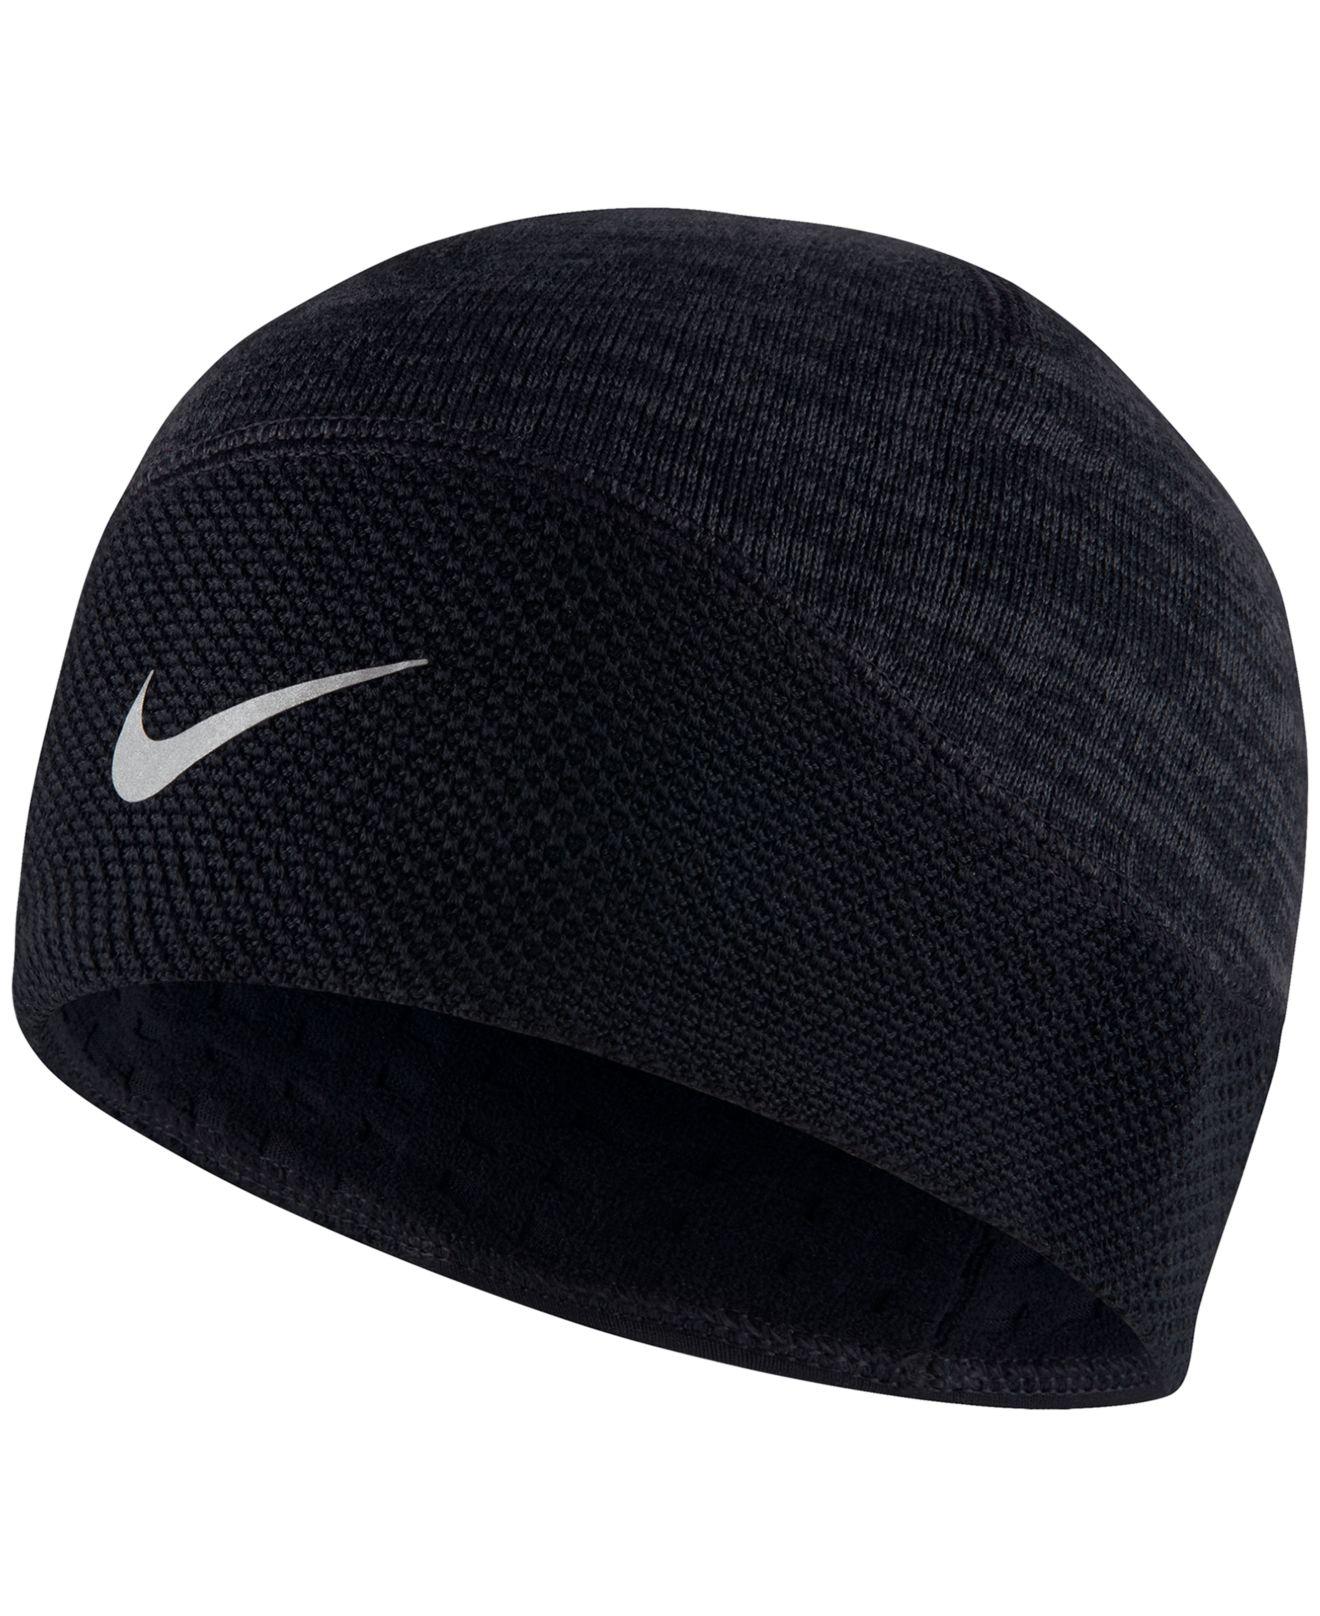 Nike Dri-fit Running Beanie in Black for Men